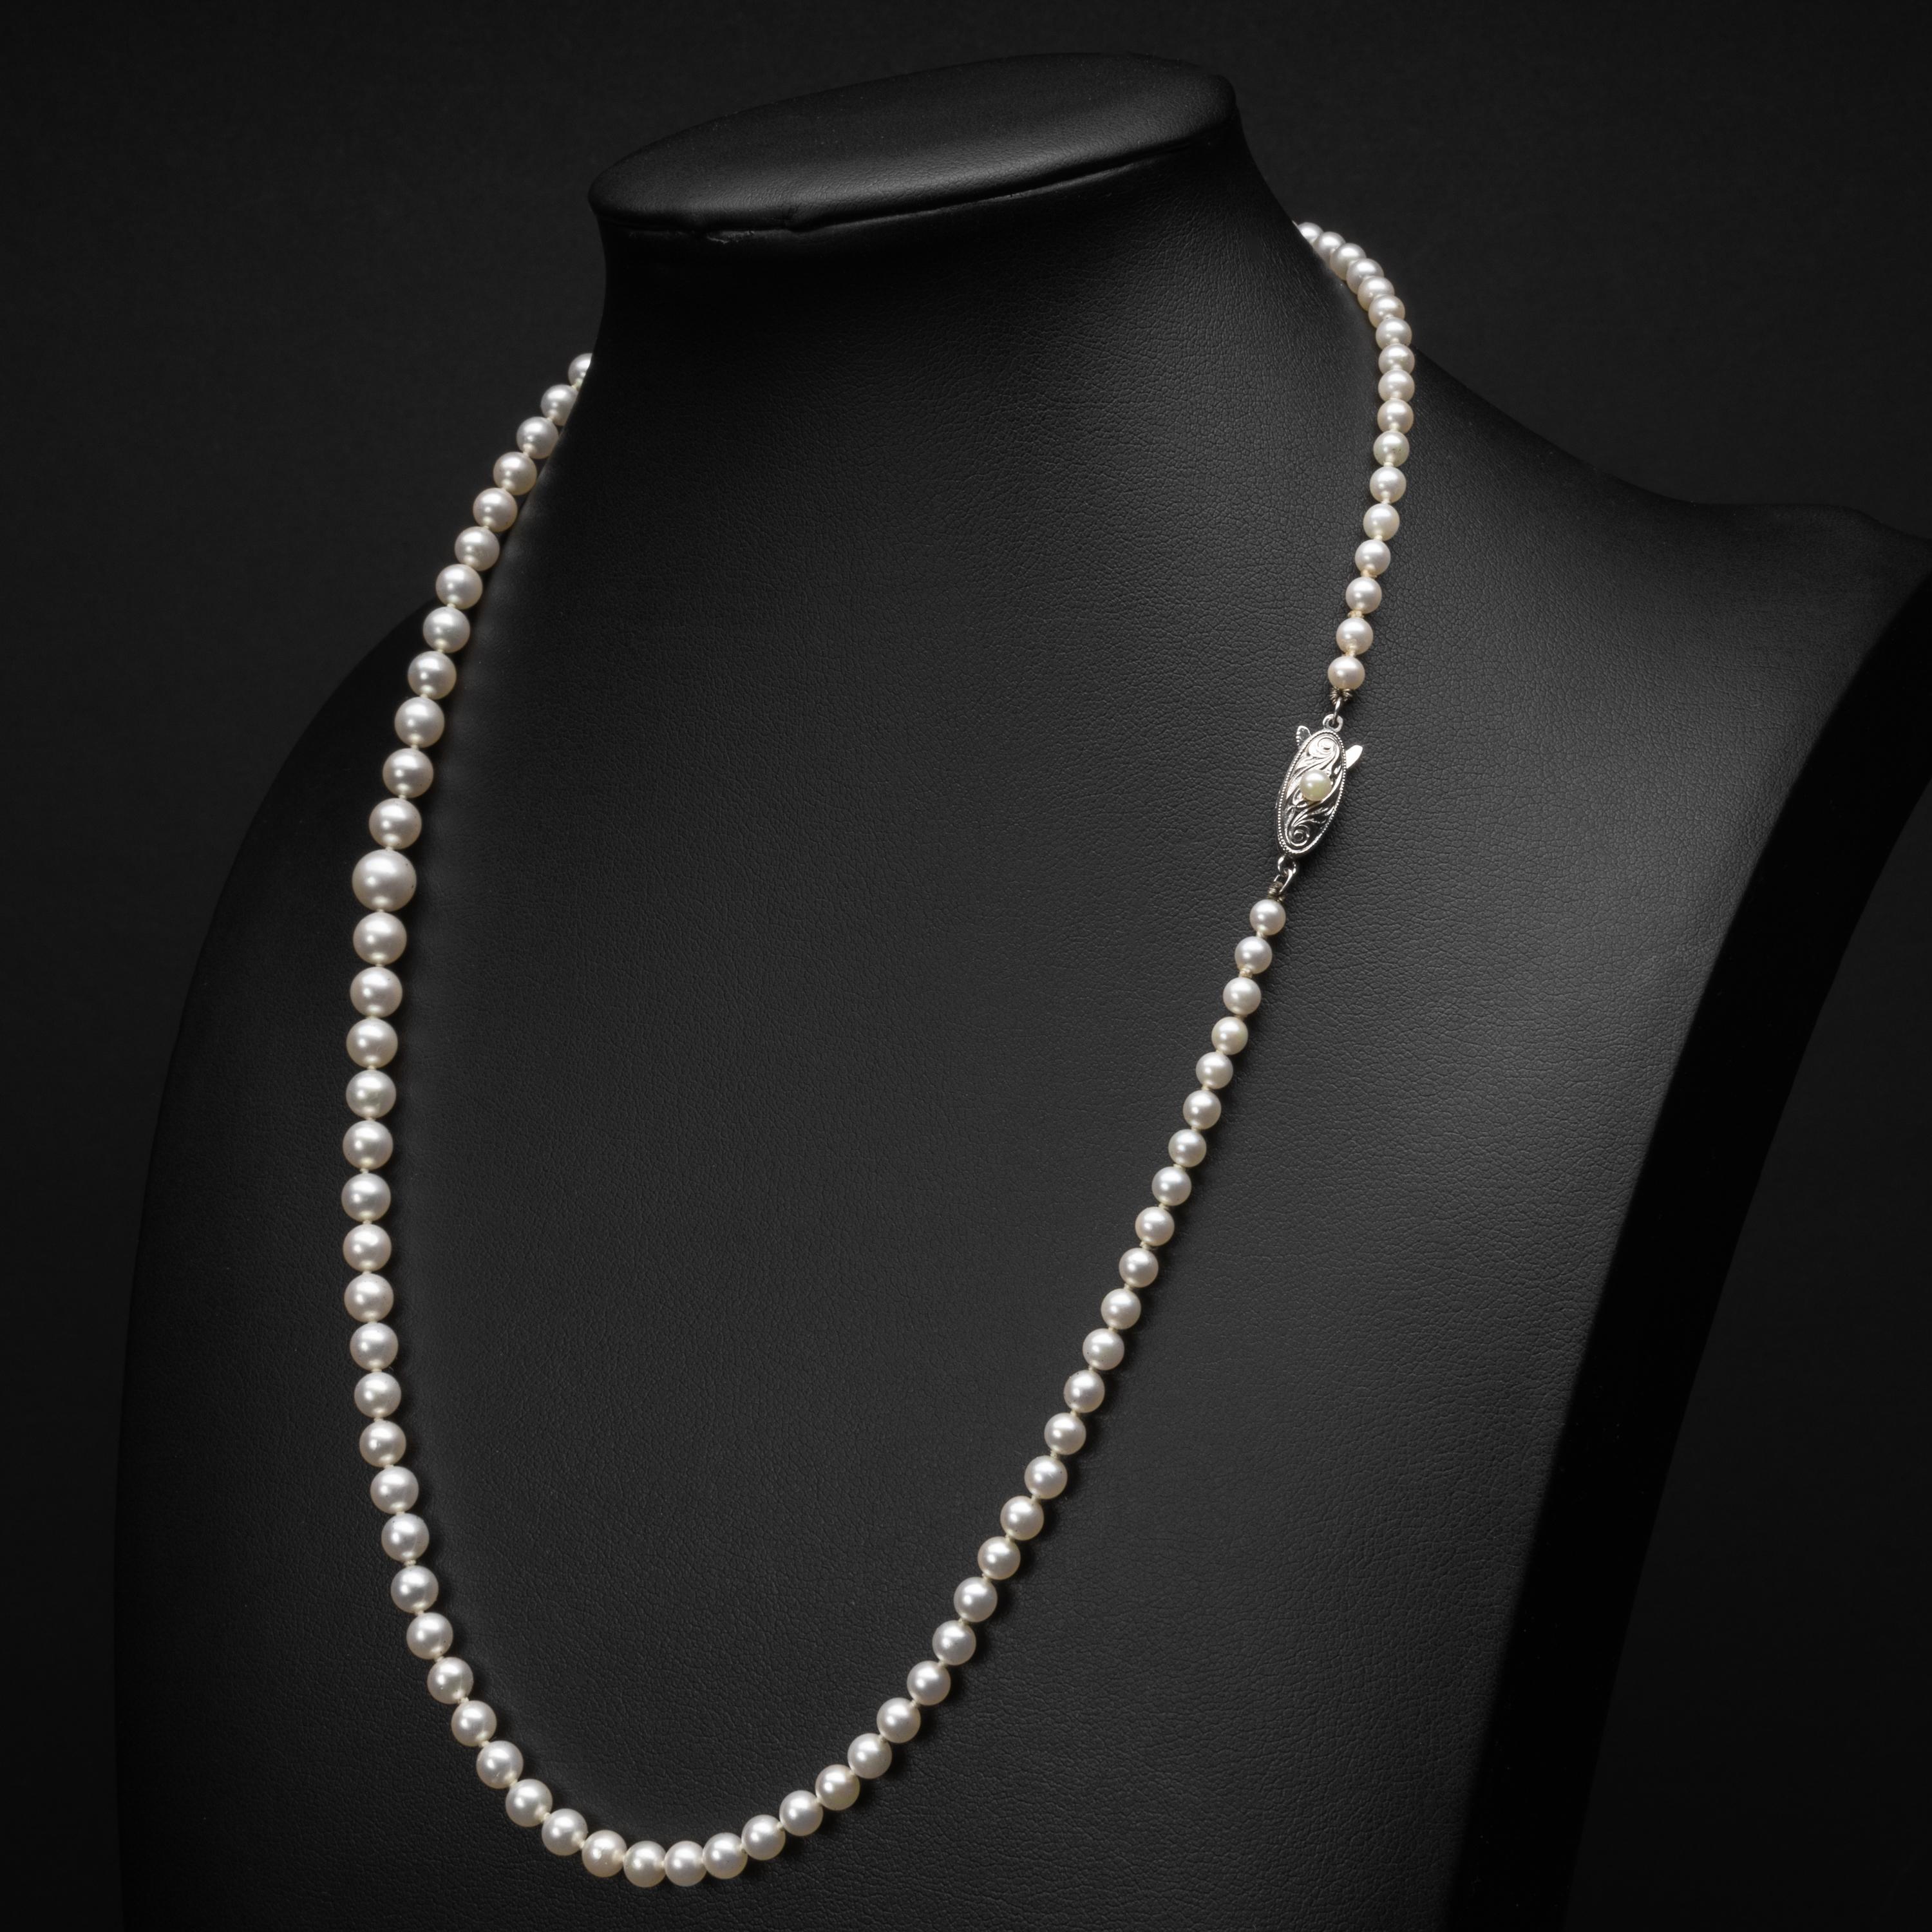 pearl necklace hong kong price